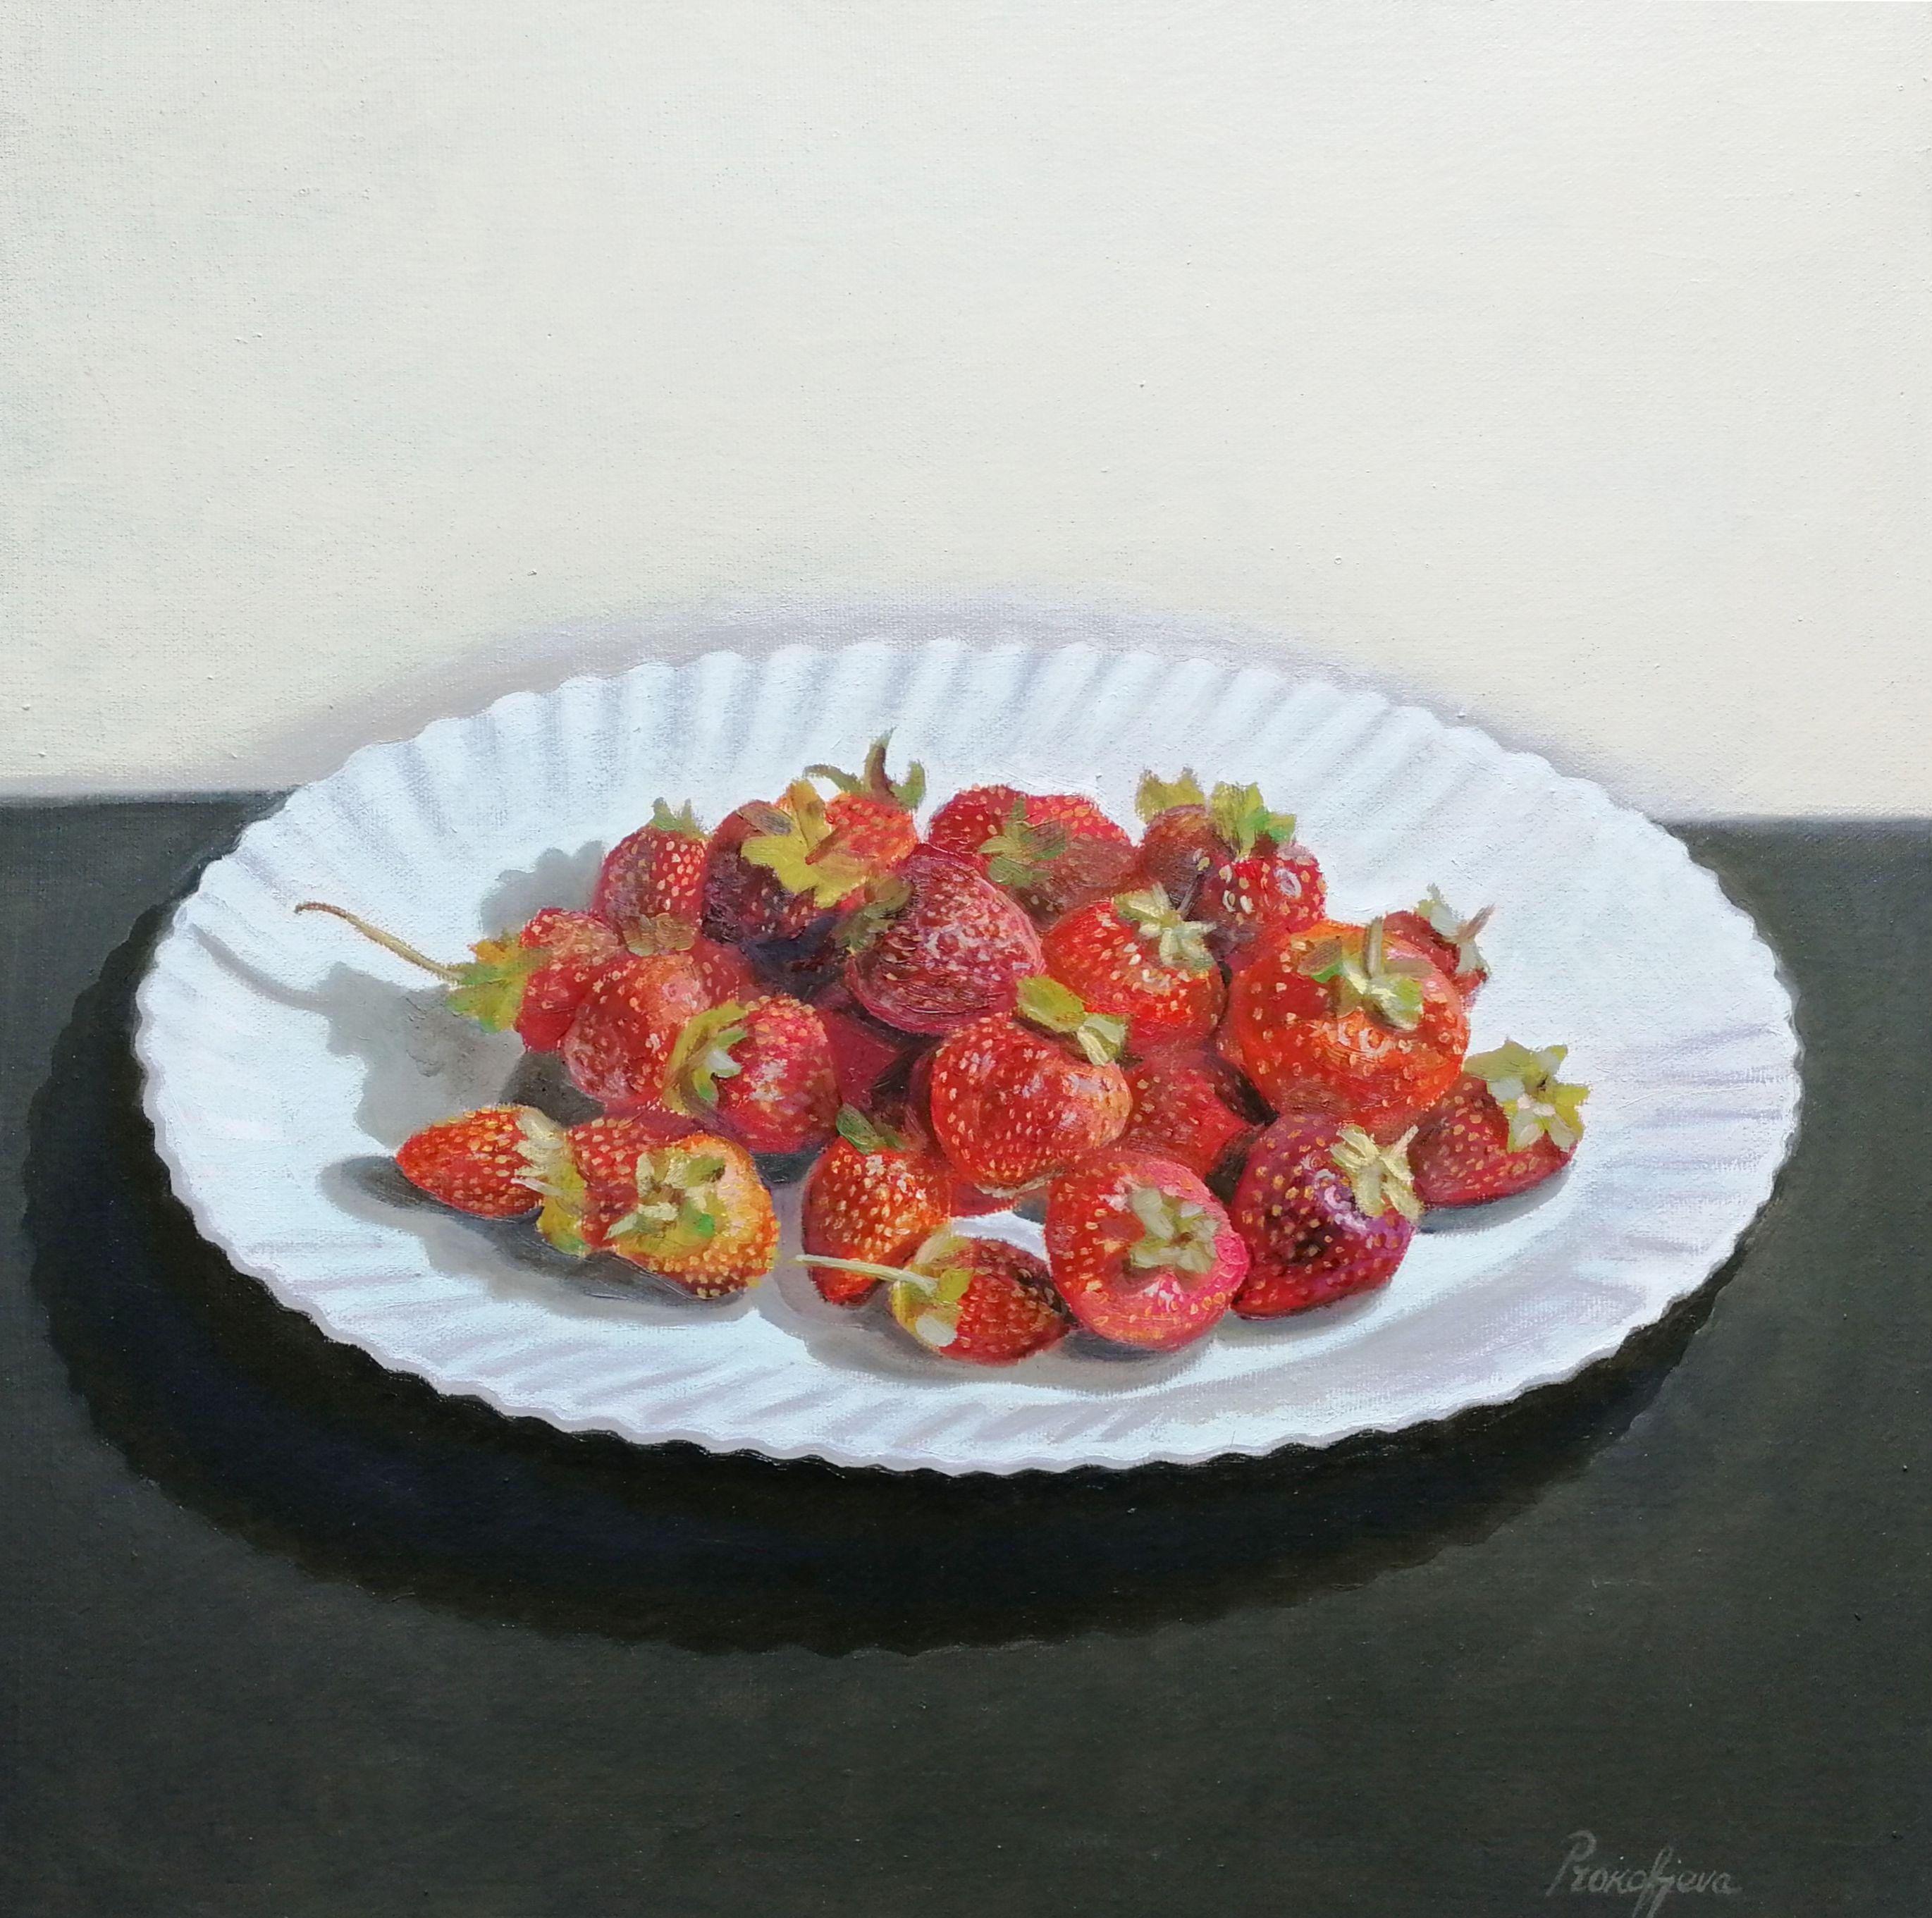 Strawberries. 2019, oil on canvas, 40x40 cm